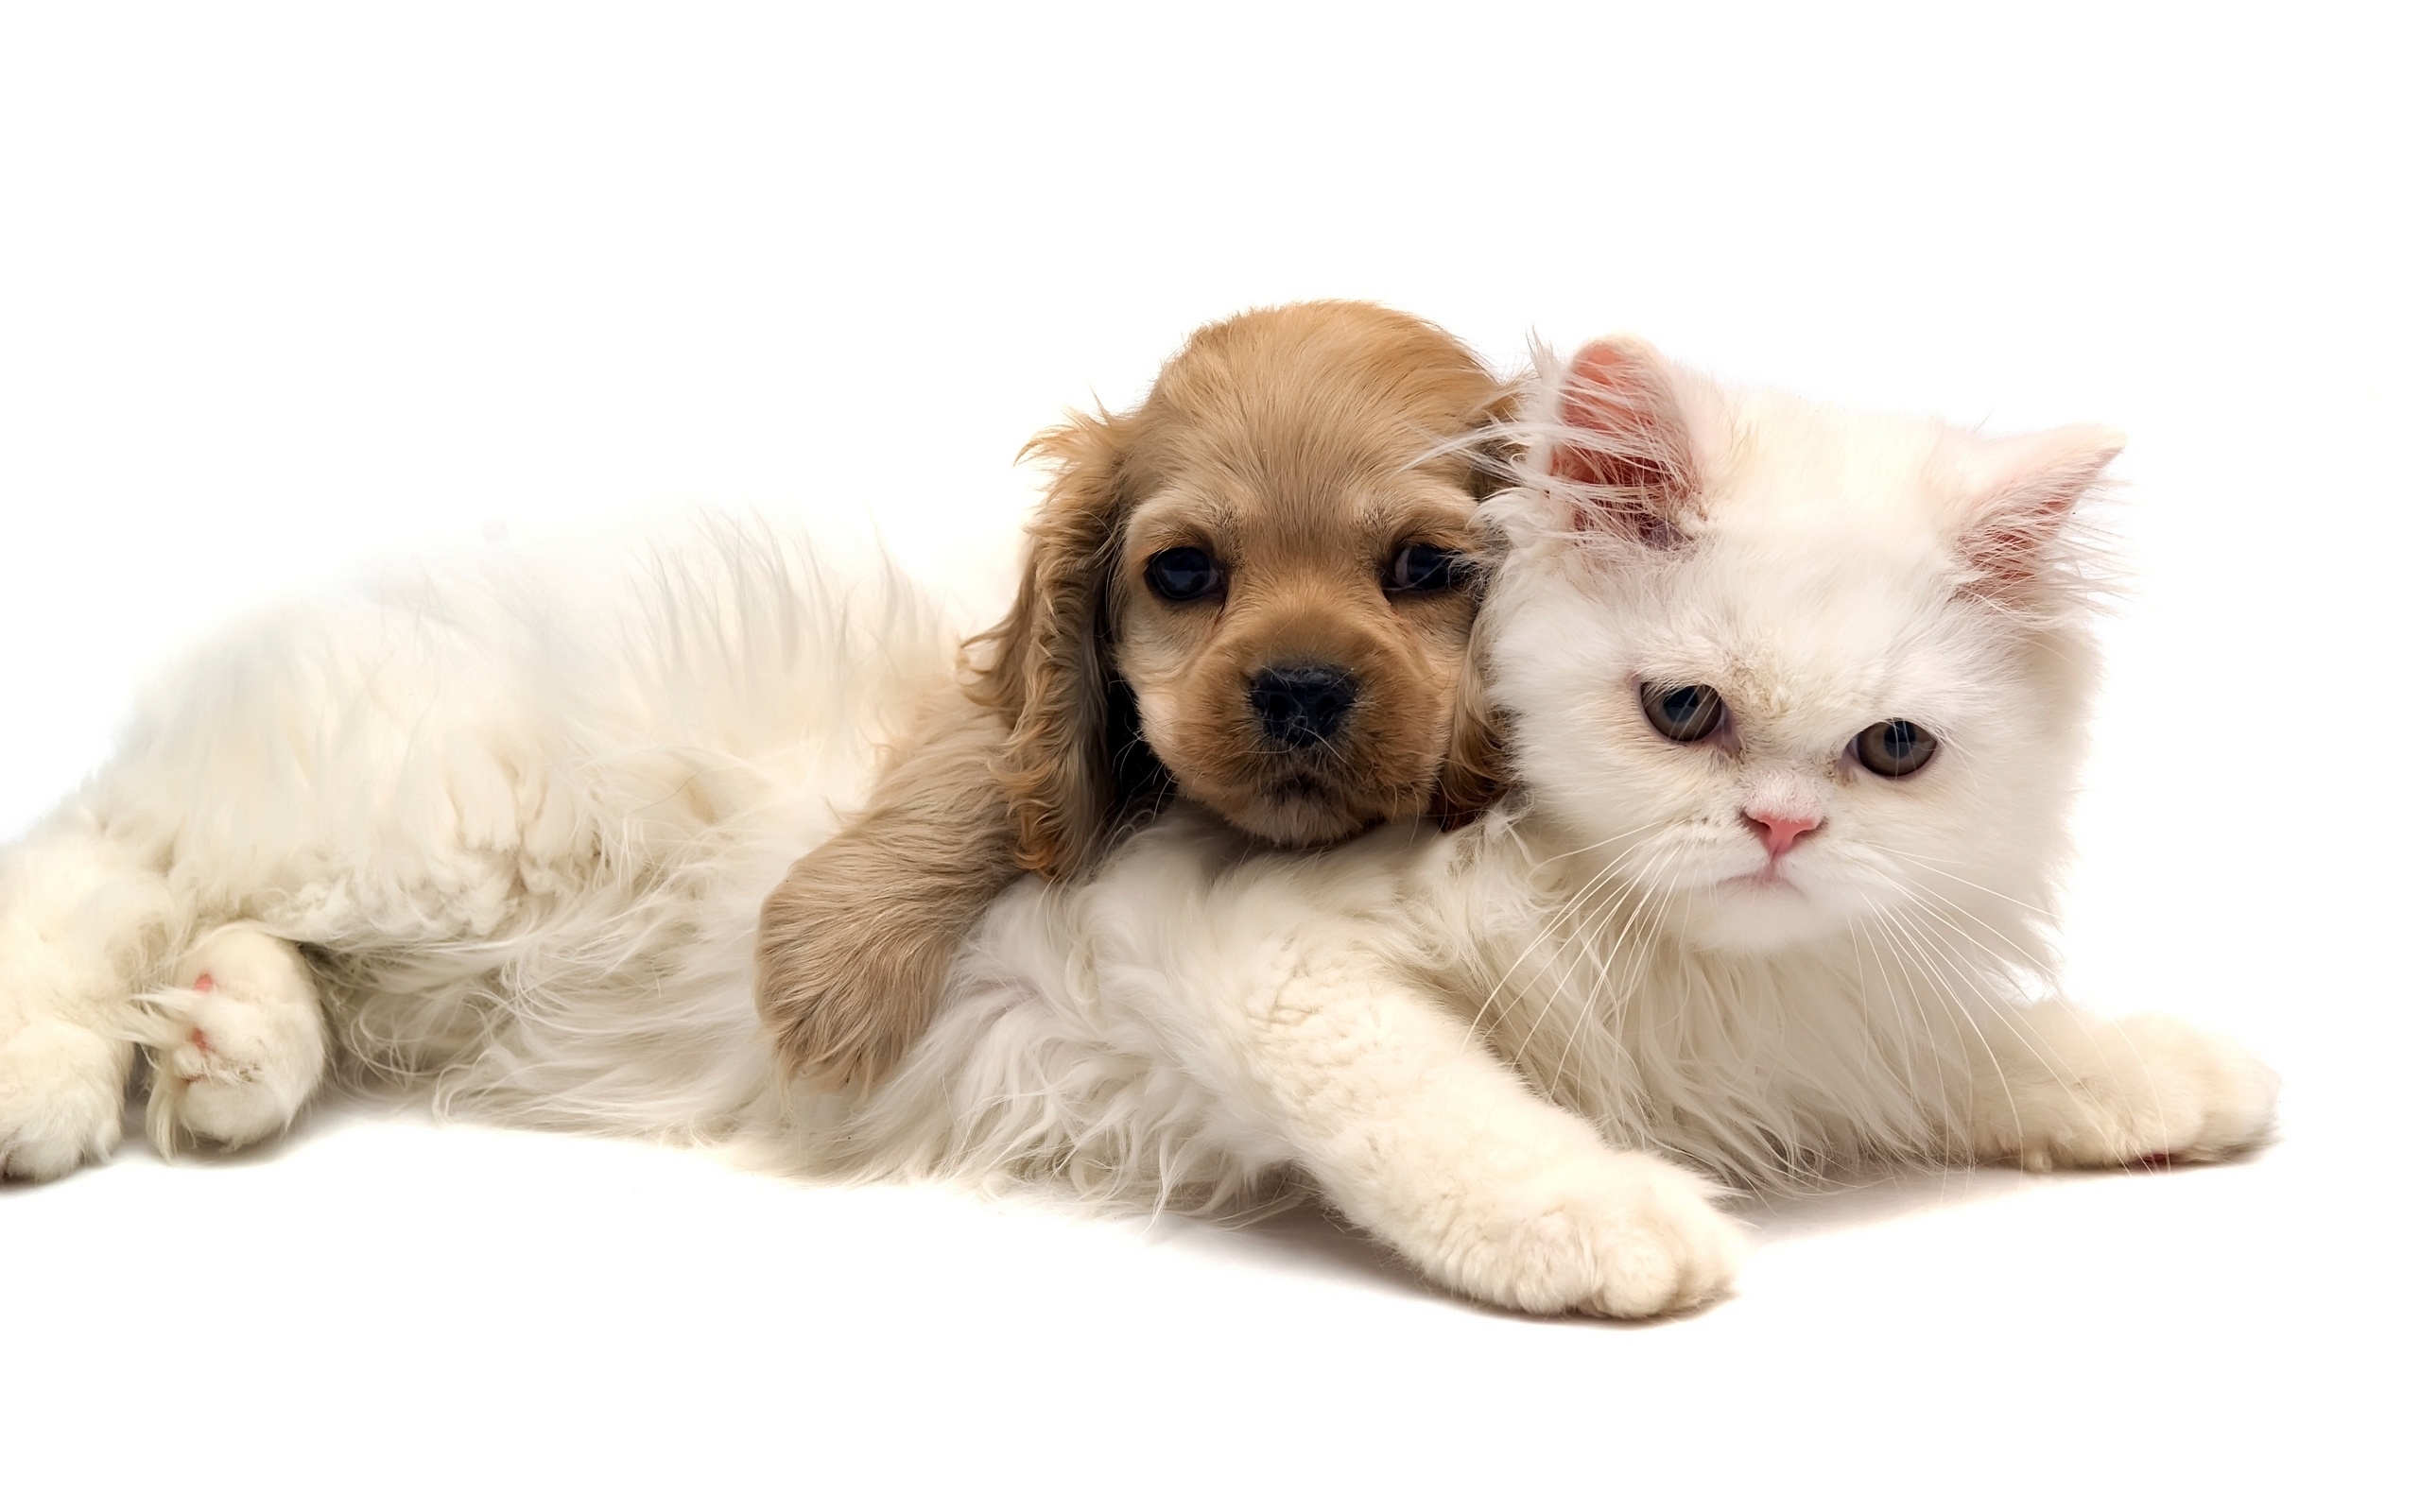 Cute Dog and Cat Wallpaper | PixelsTalk.Net